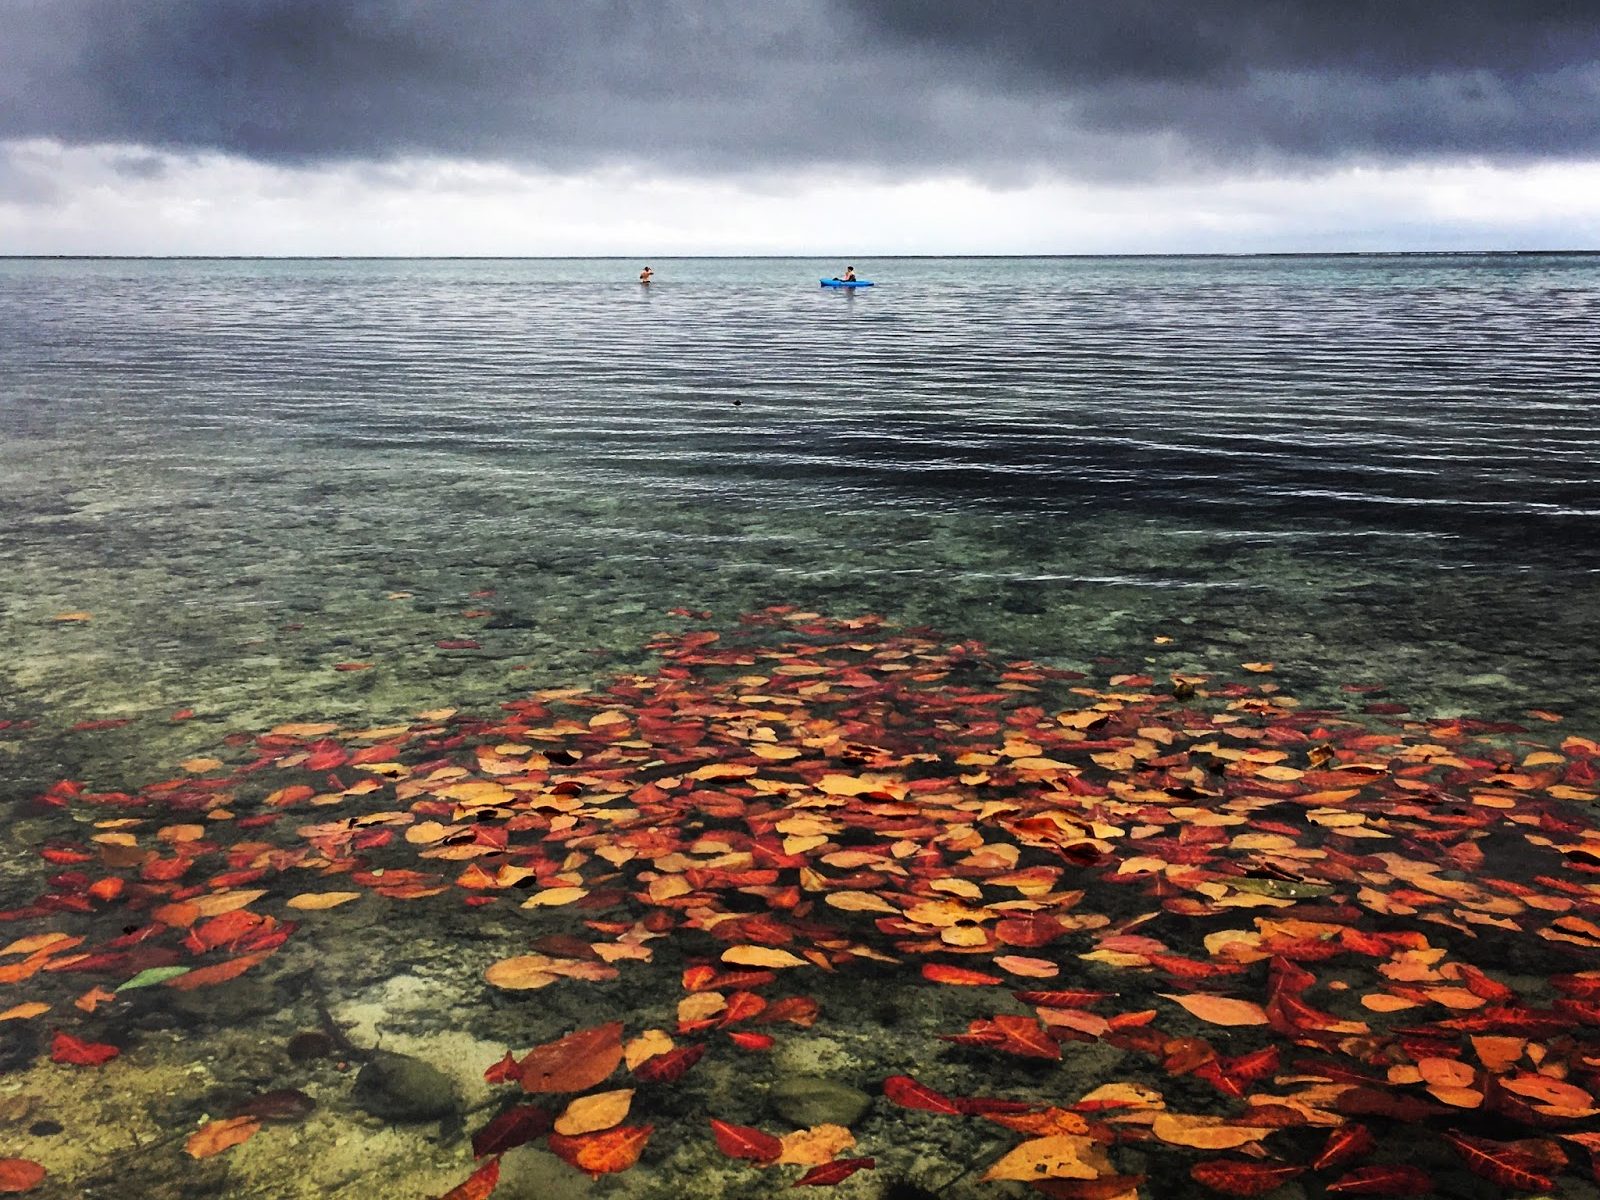 Autumn leaves over the ocean, Fiji